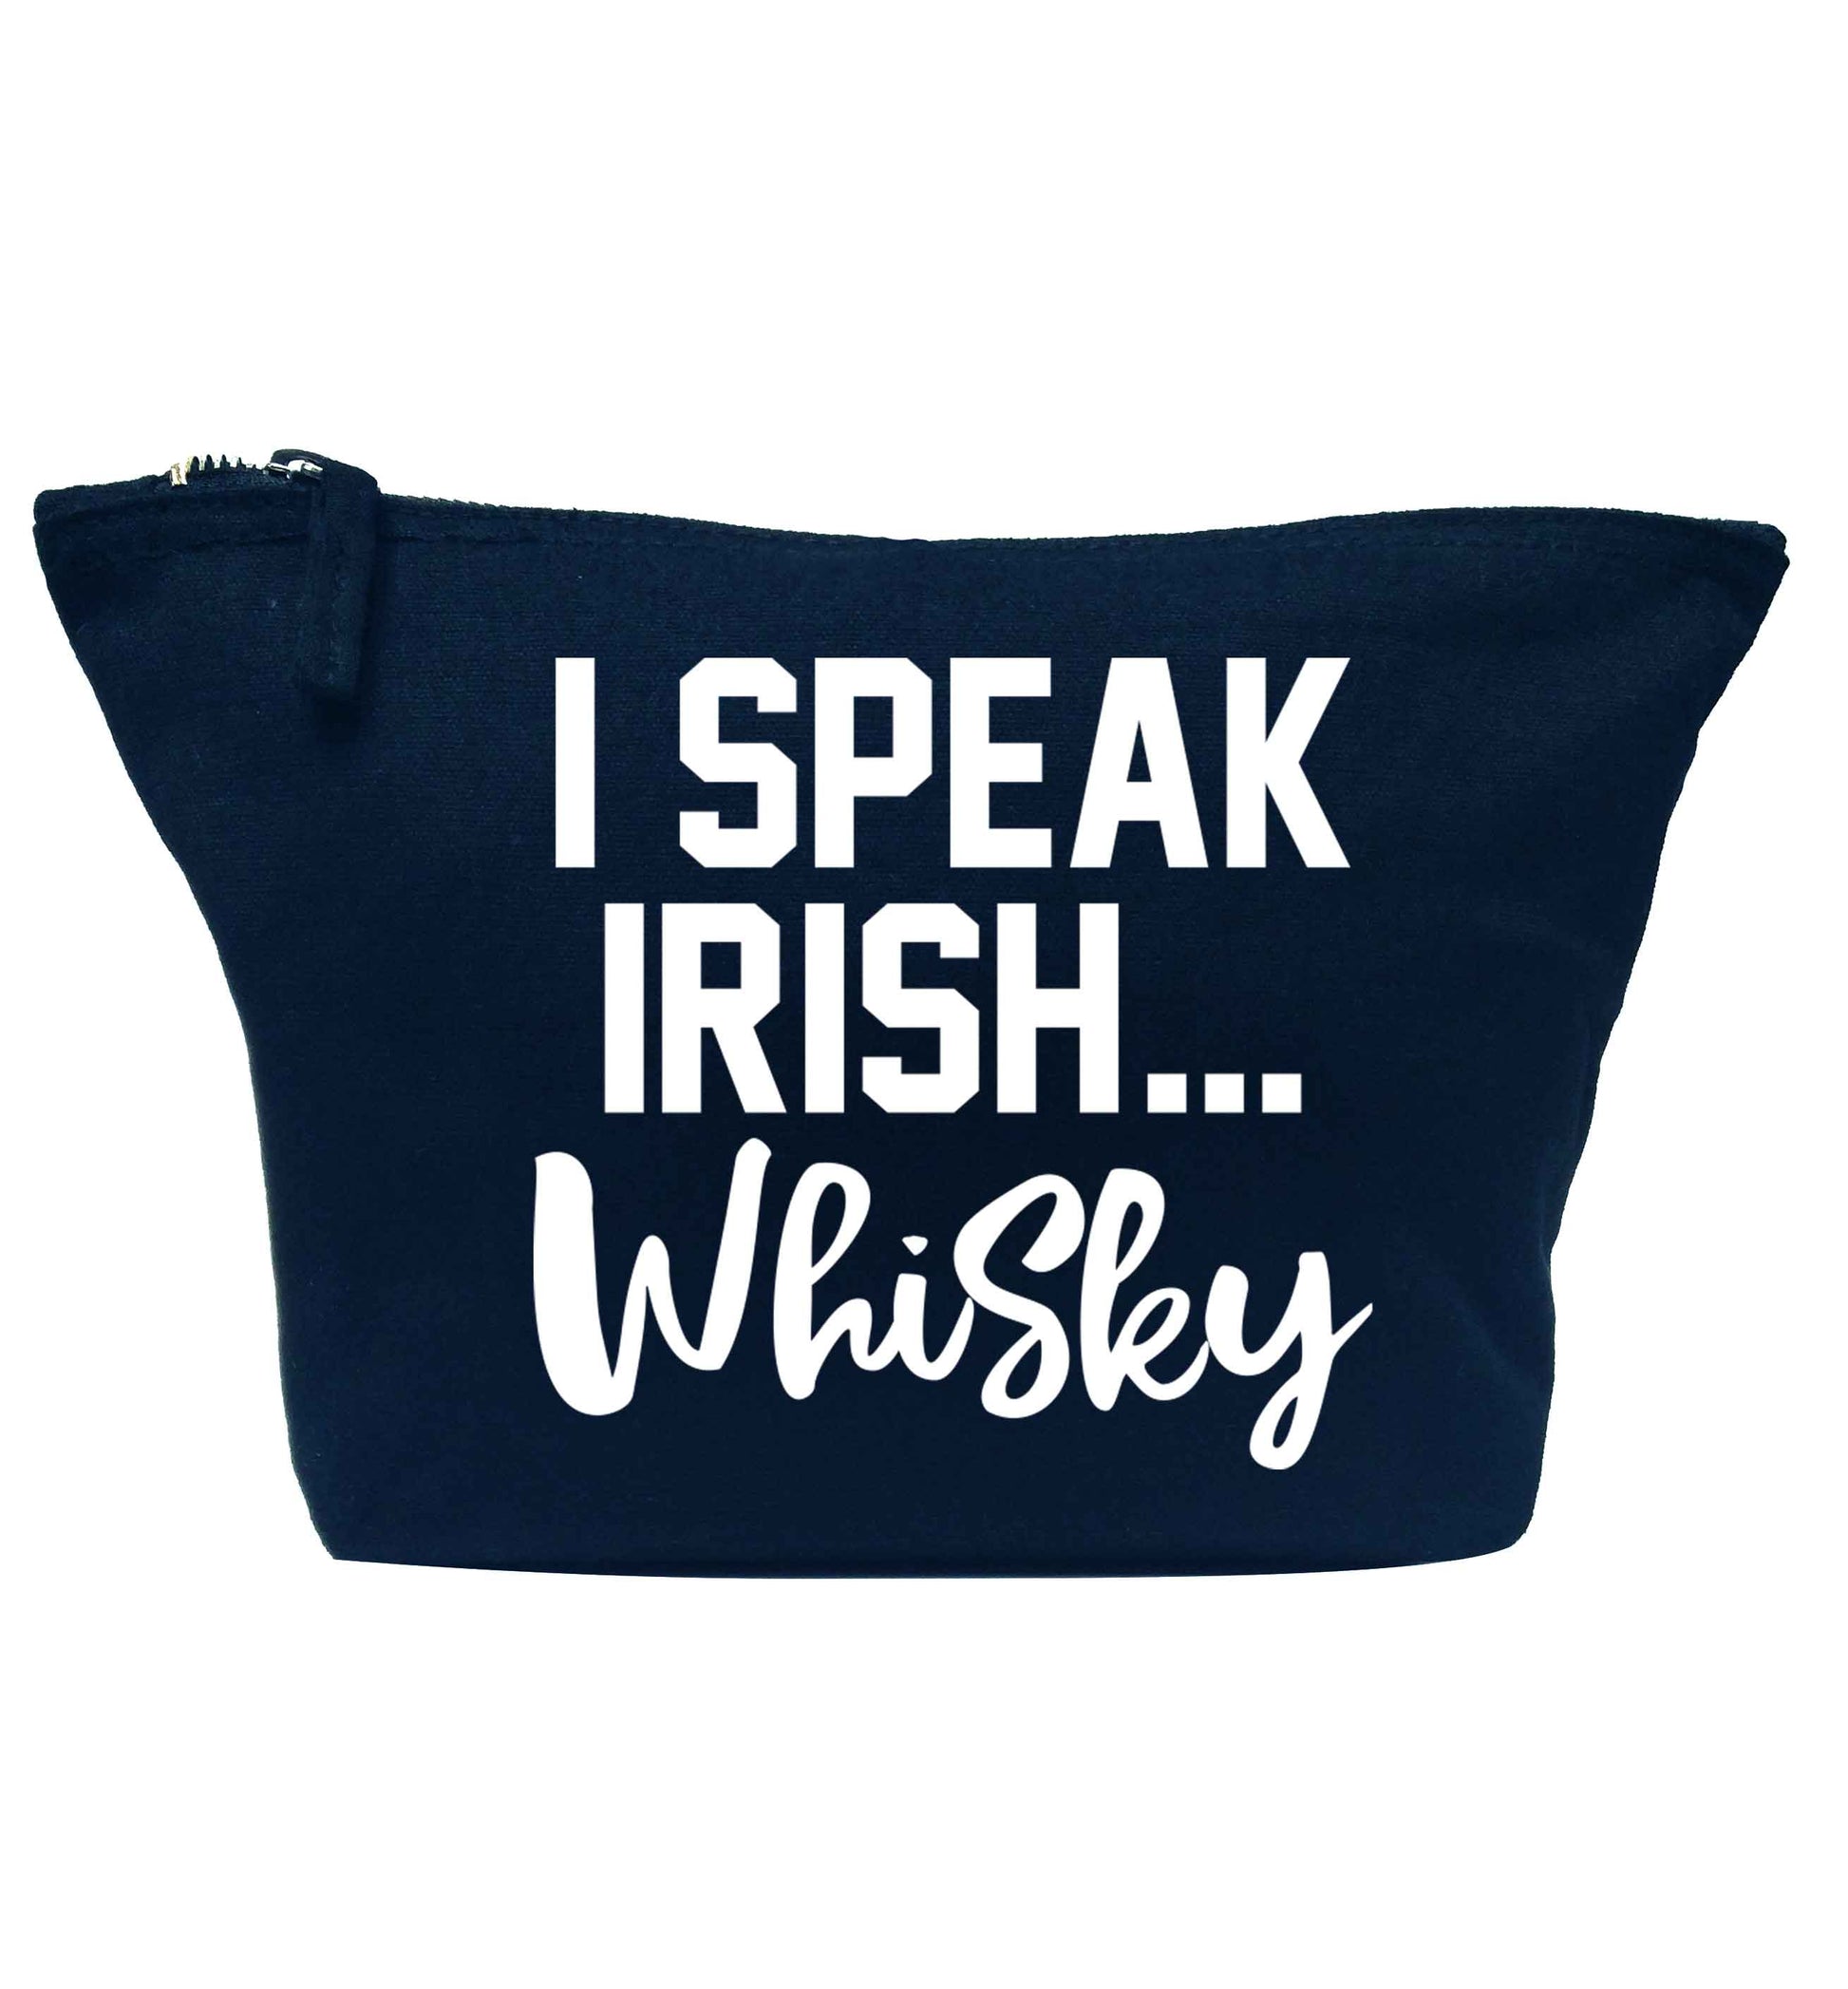 I speak Irish whisky navy makeup bag